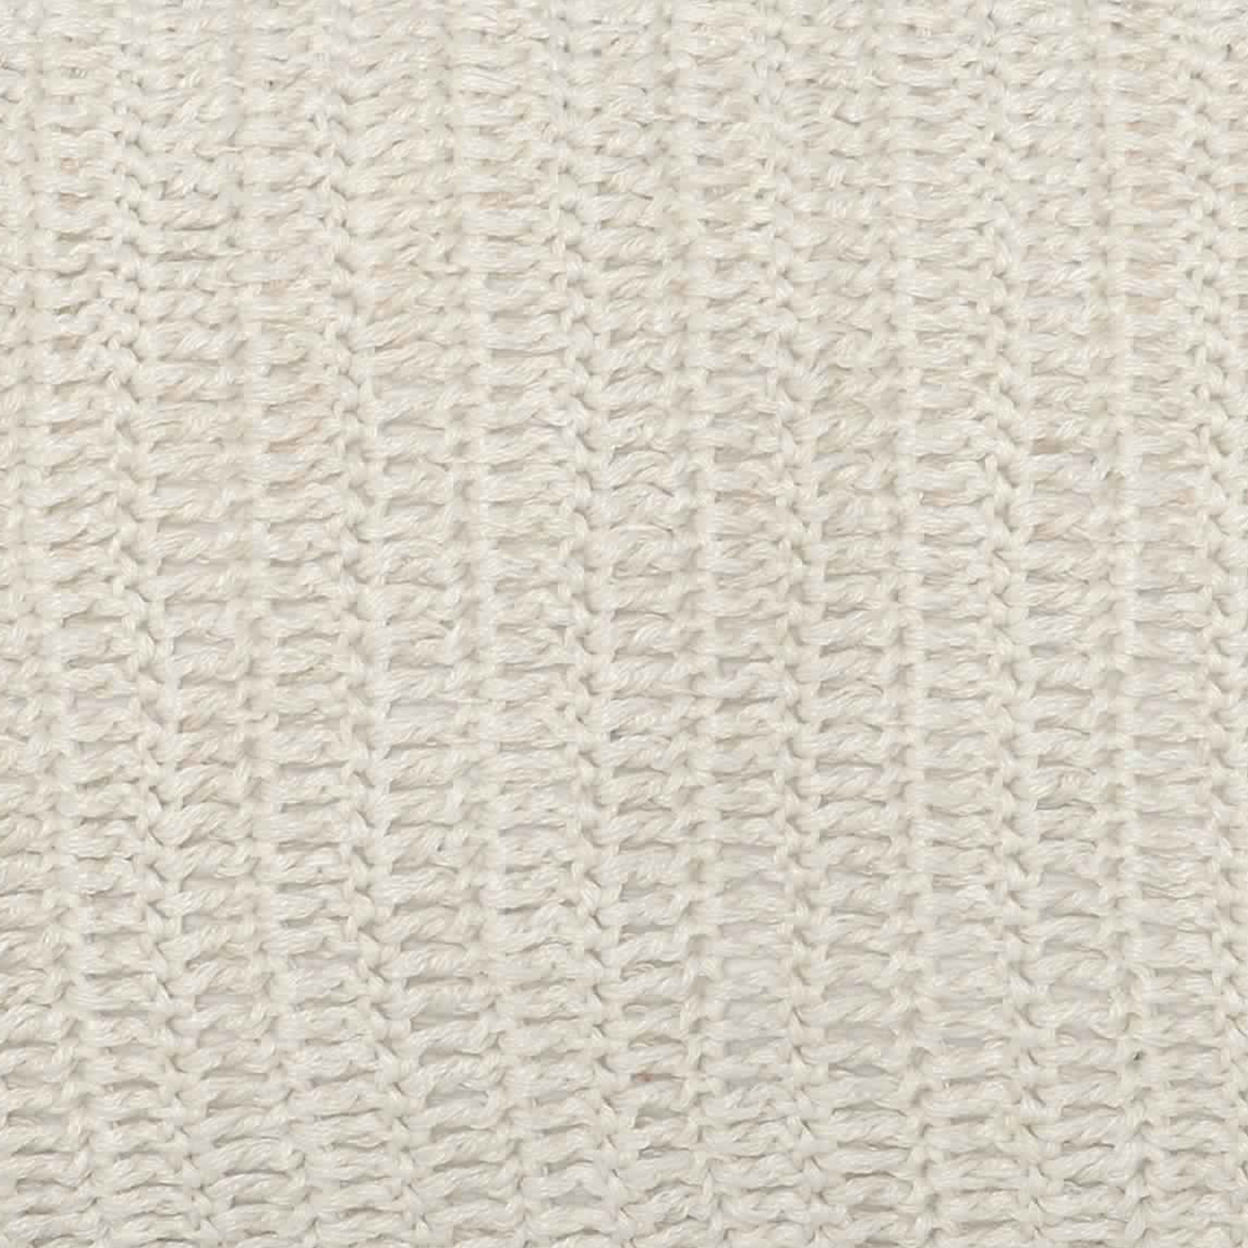 Rectangular Fabric Throw Pillow With Hand Knitted Details, White- Saltoro Sherpi